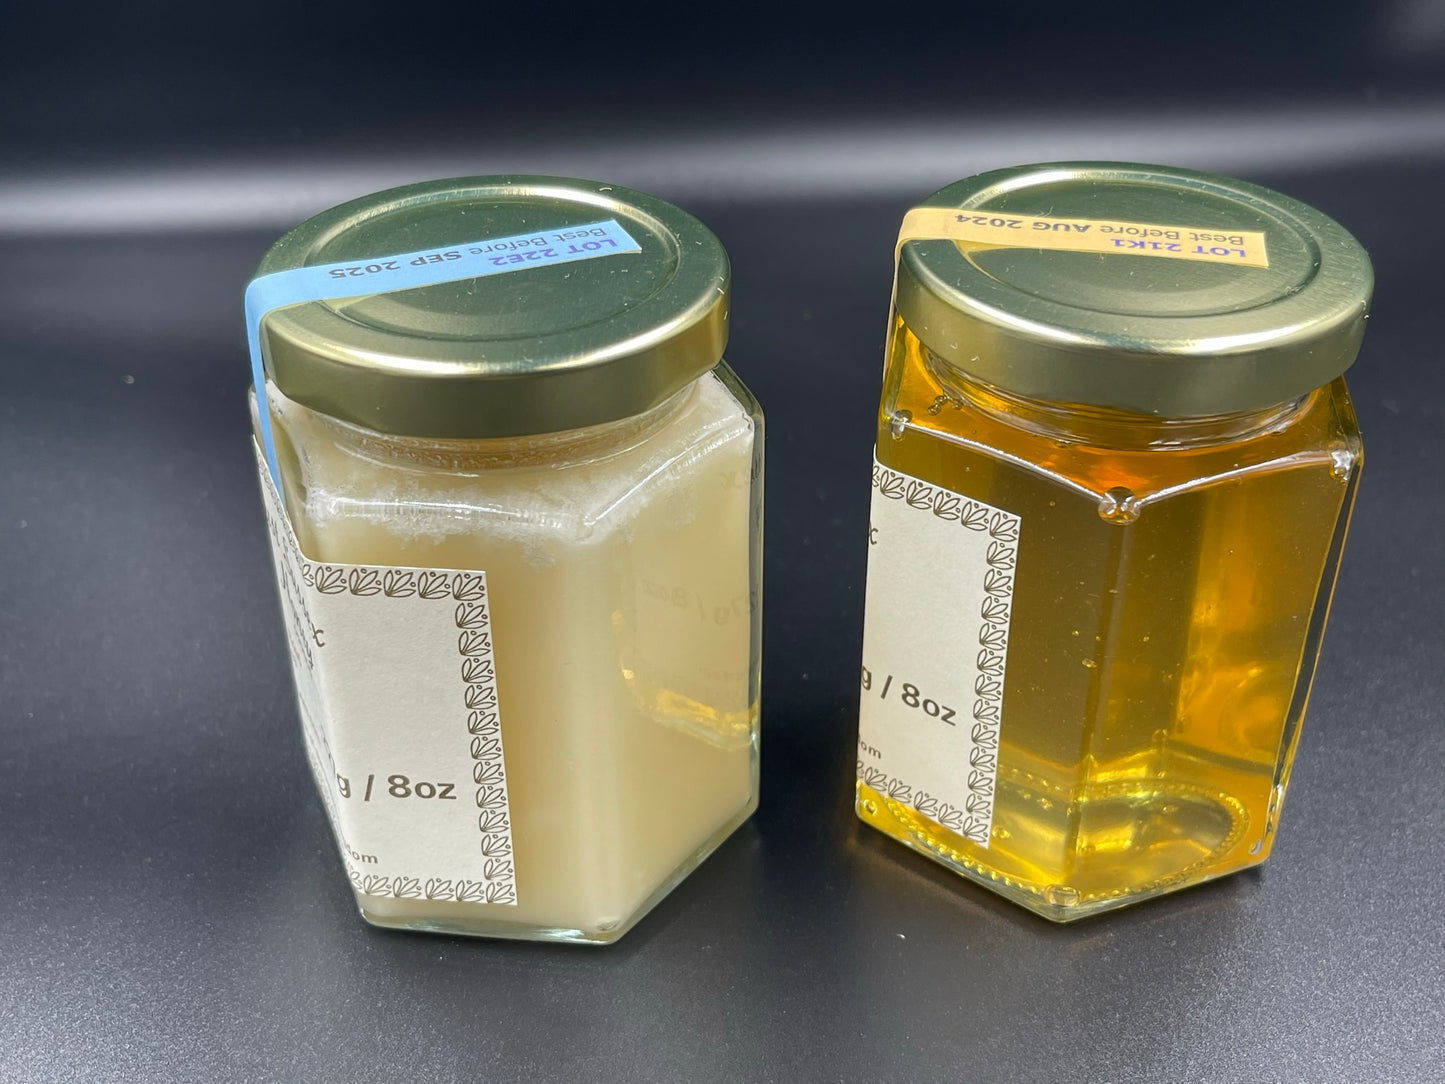 Classic Raw Honey, 2 jar set (2x227g/8oz) - one each of Liquid and Set honey